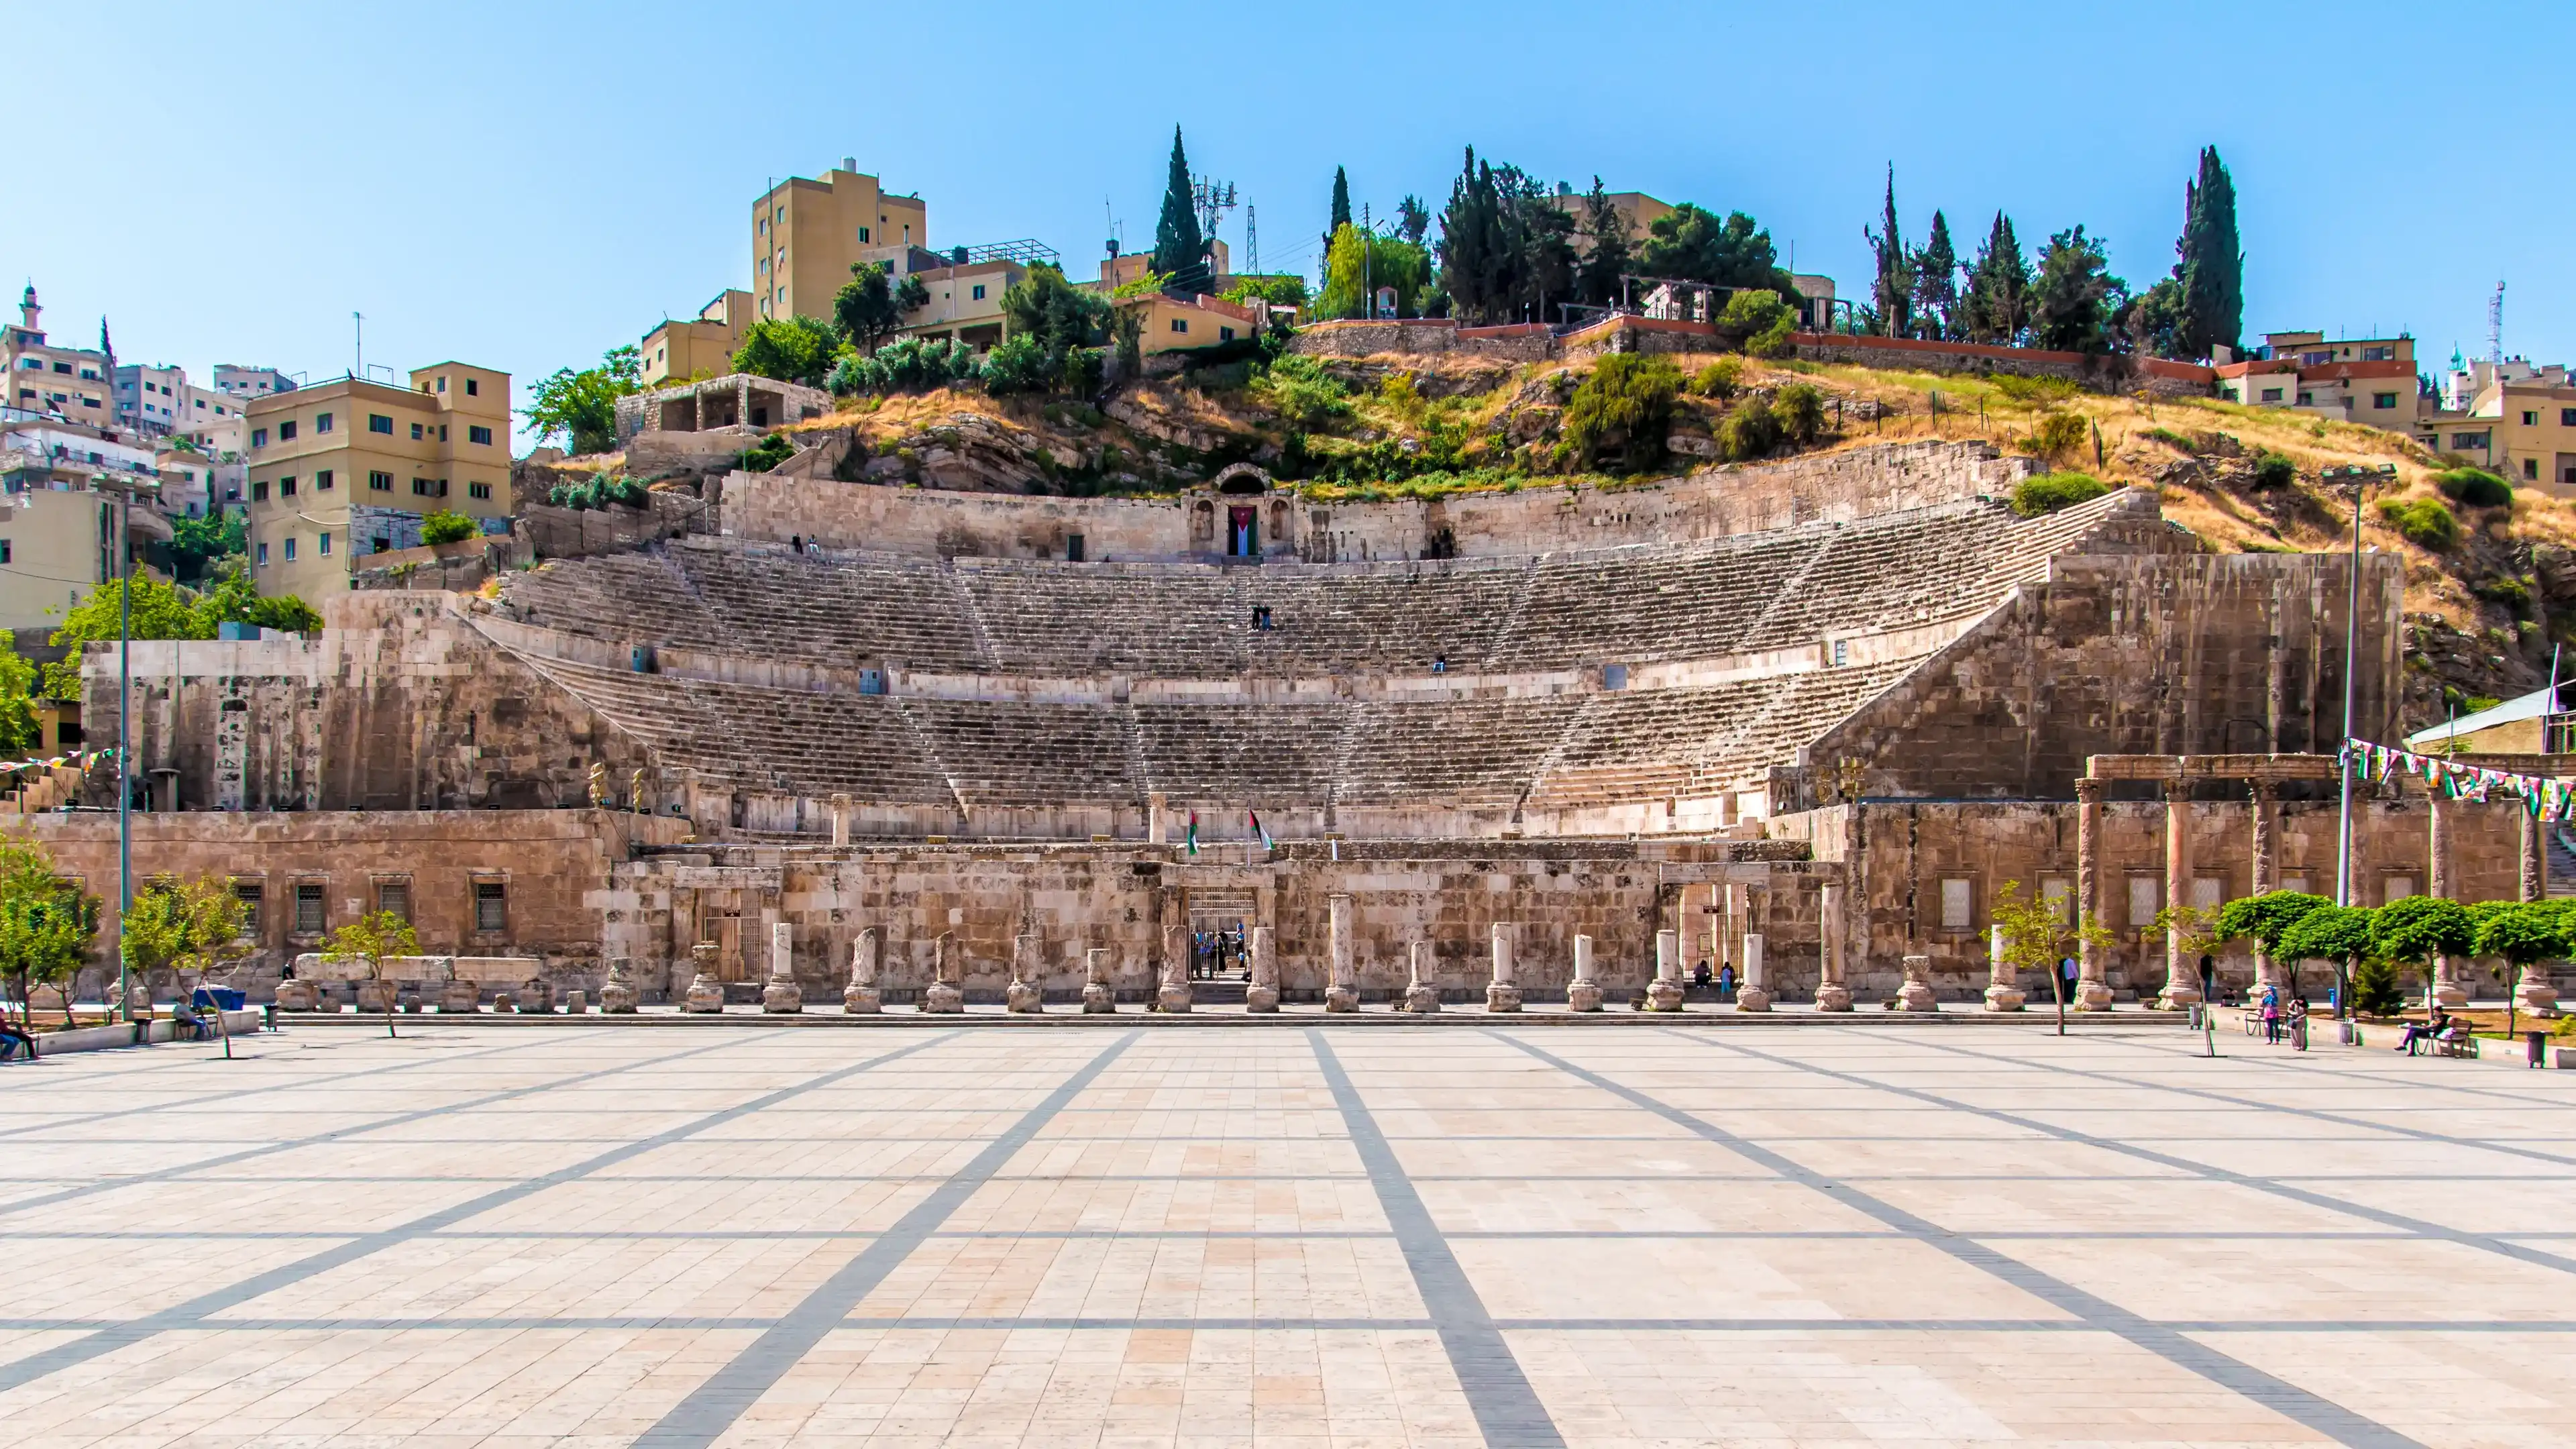 View of the Roman Theater in Amman, Jordan